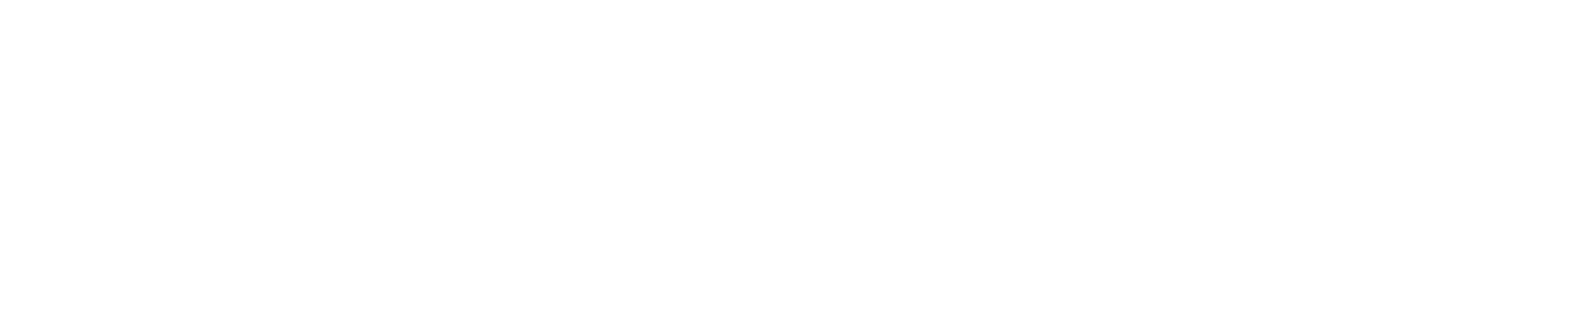 AMC Networks
 Logo groß für dunkle Hintergründe (transparentes PNG)